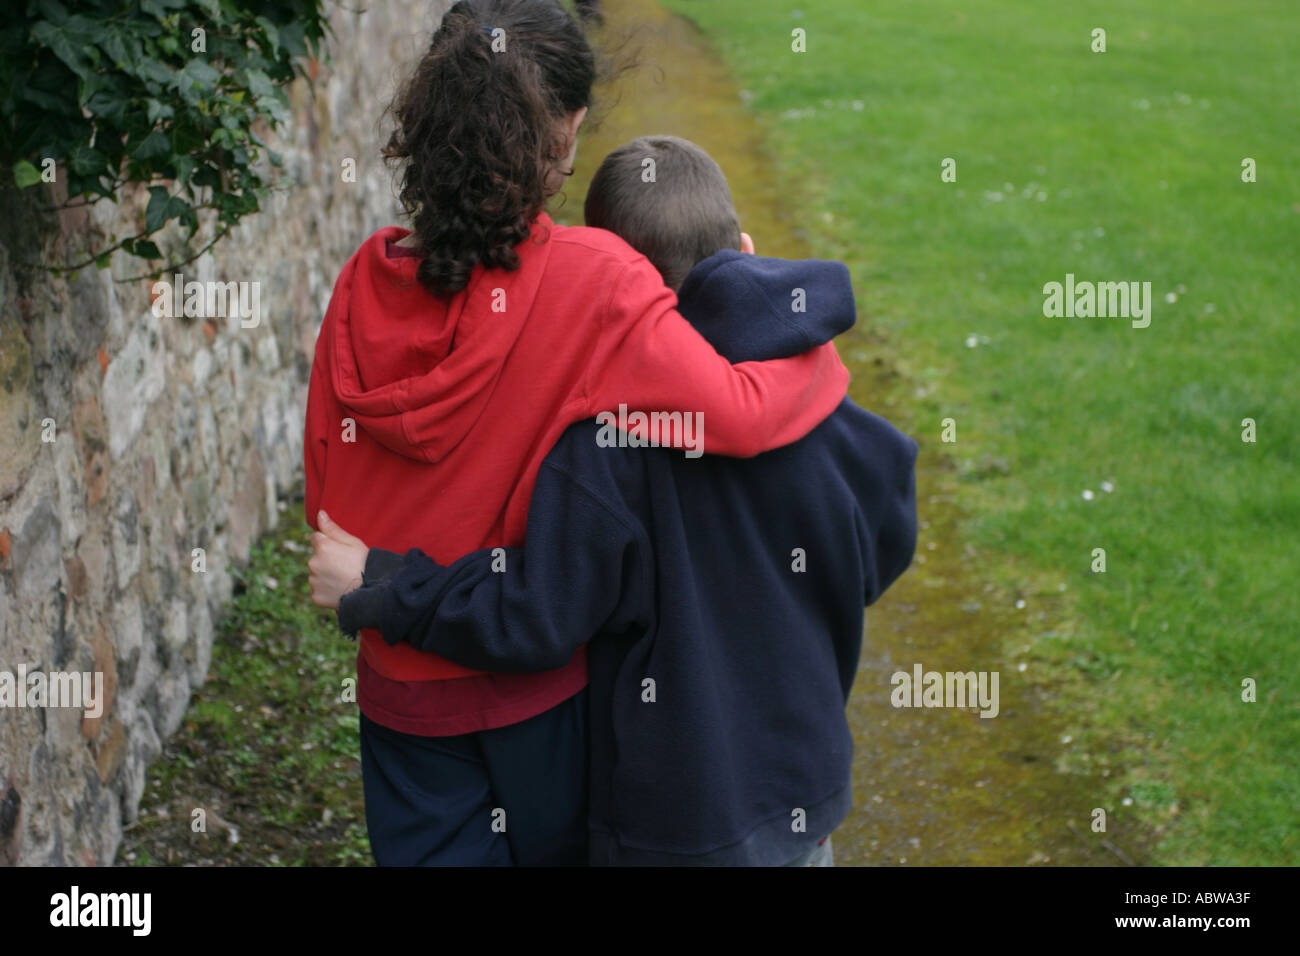 Two siblings walking together, Berwick upon Tweed, Northumbria, UK. Stock Photo